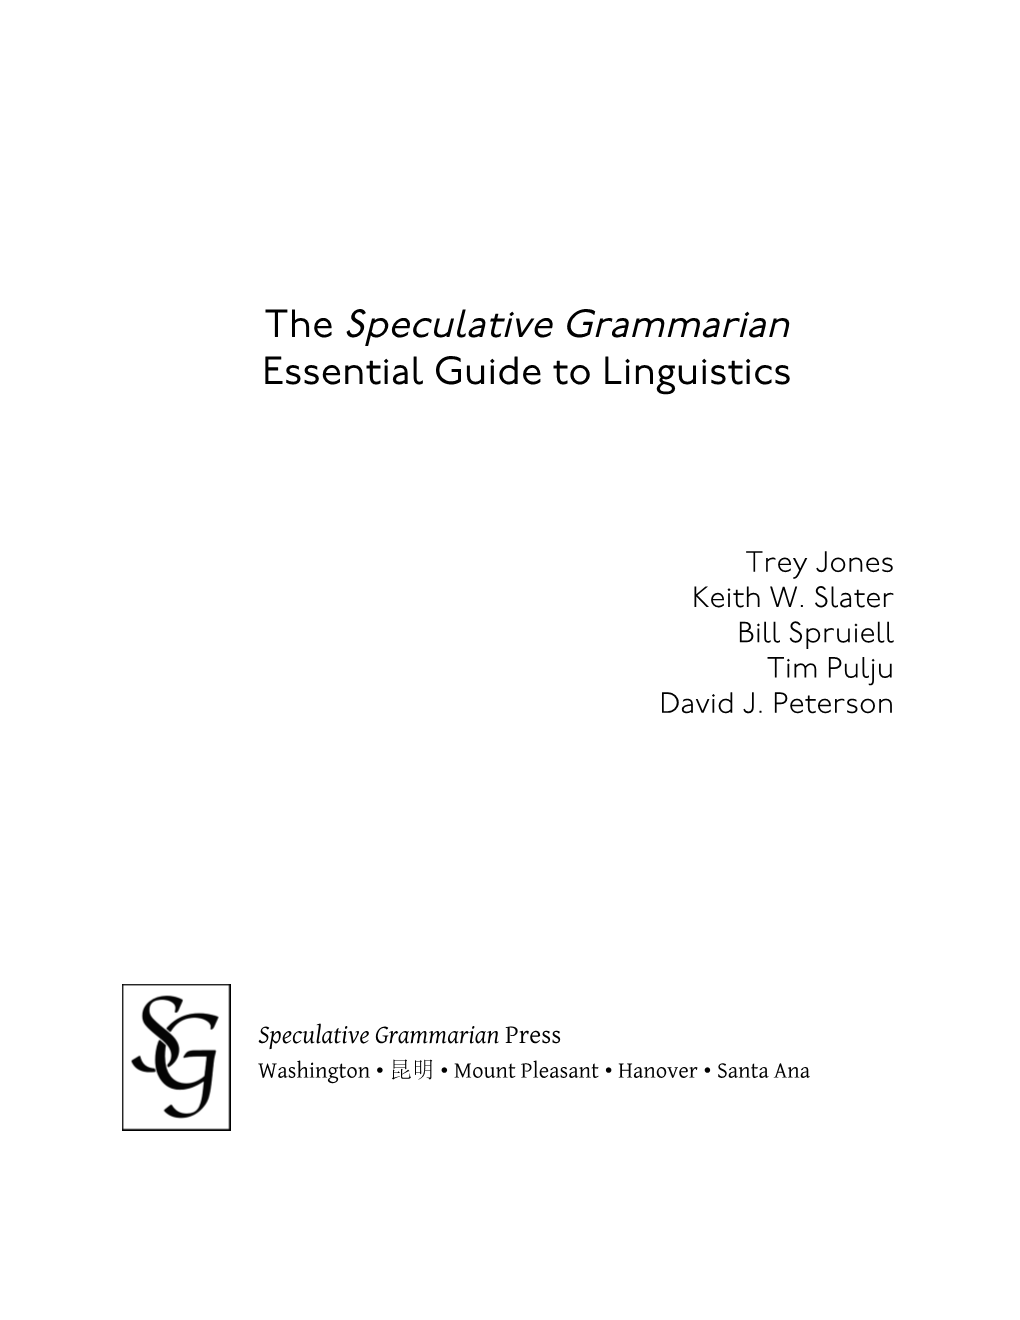 The Speculative Grammarian Essential Guide to Linguistics